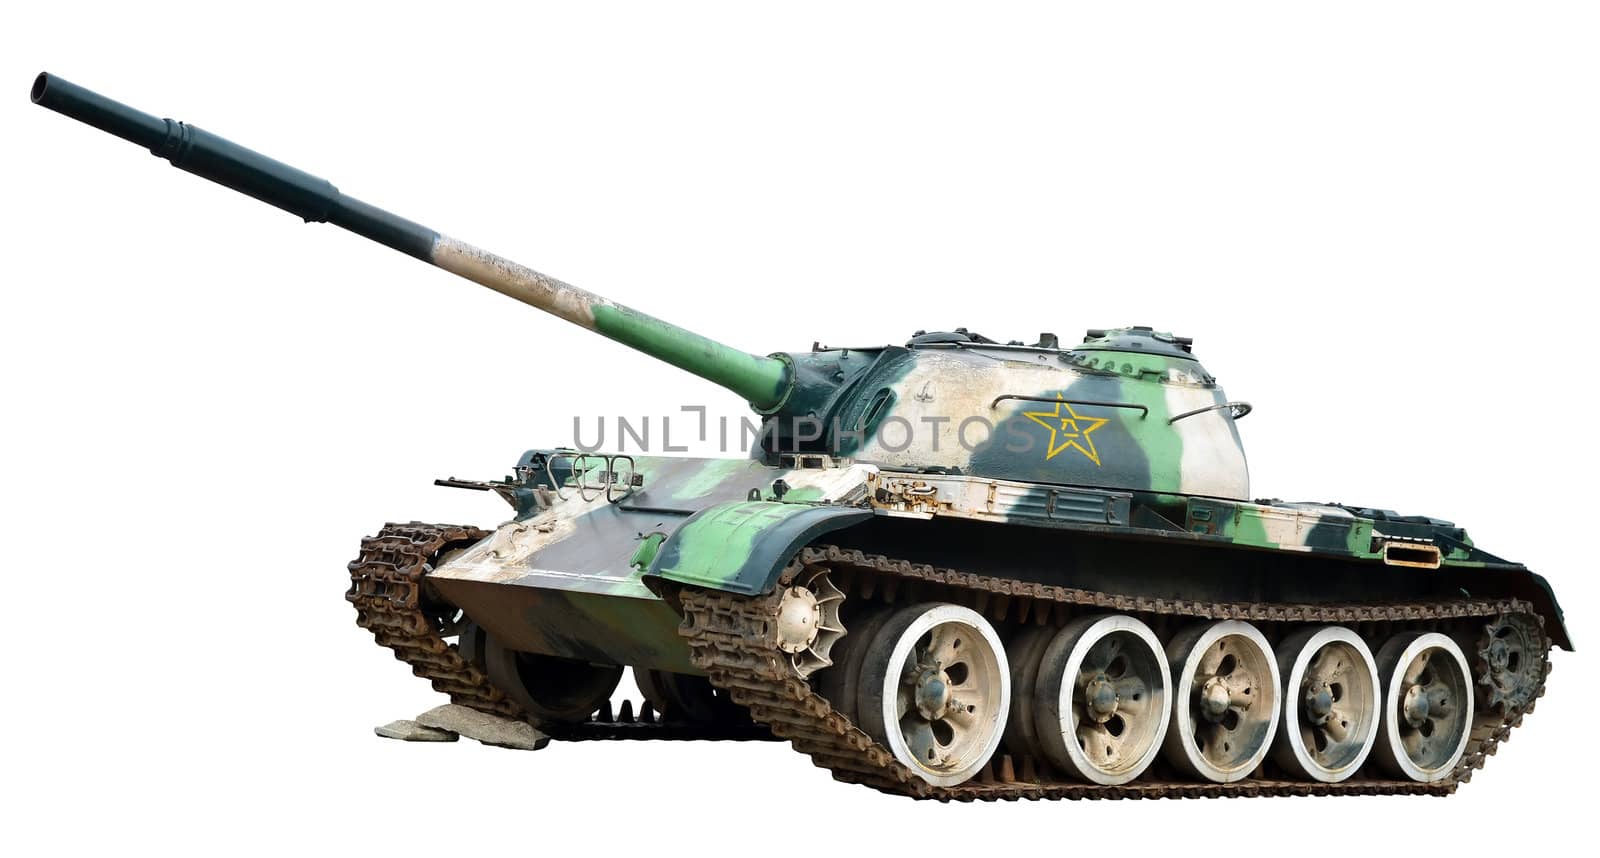 Chinese tank isolated on white background